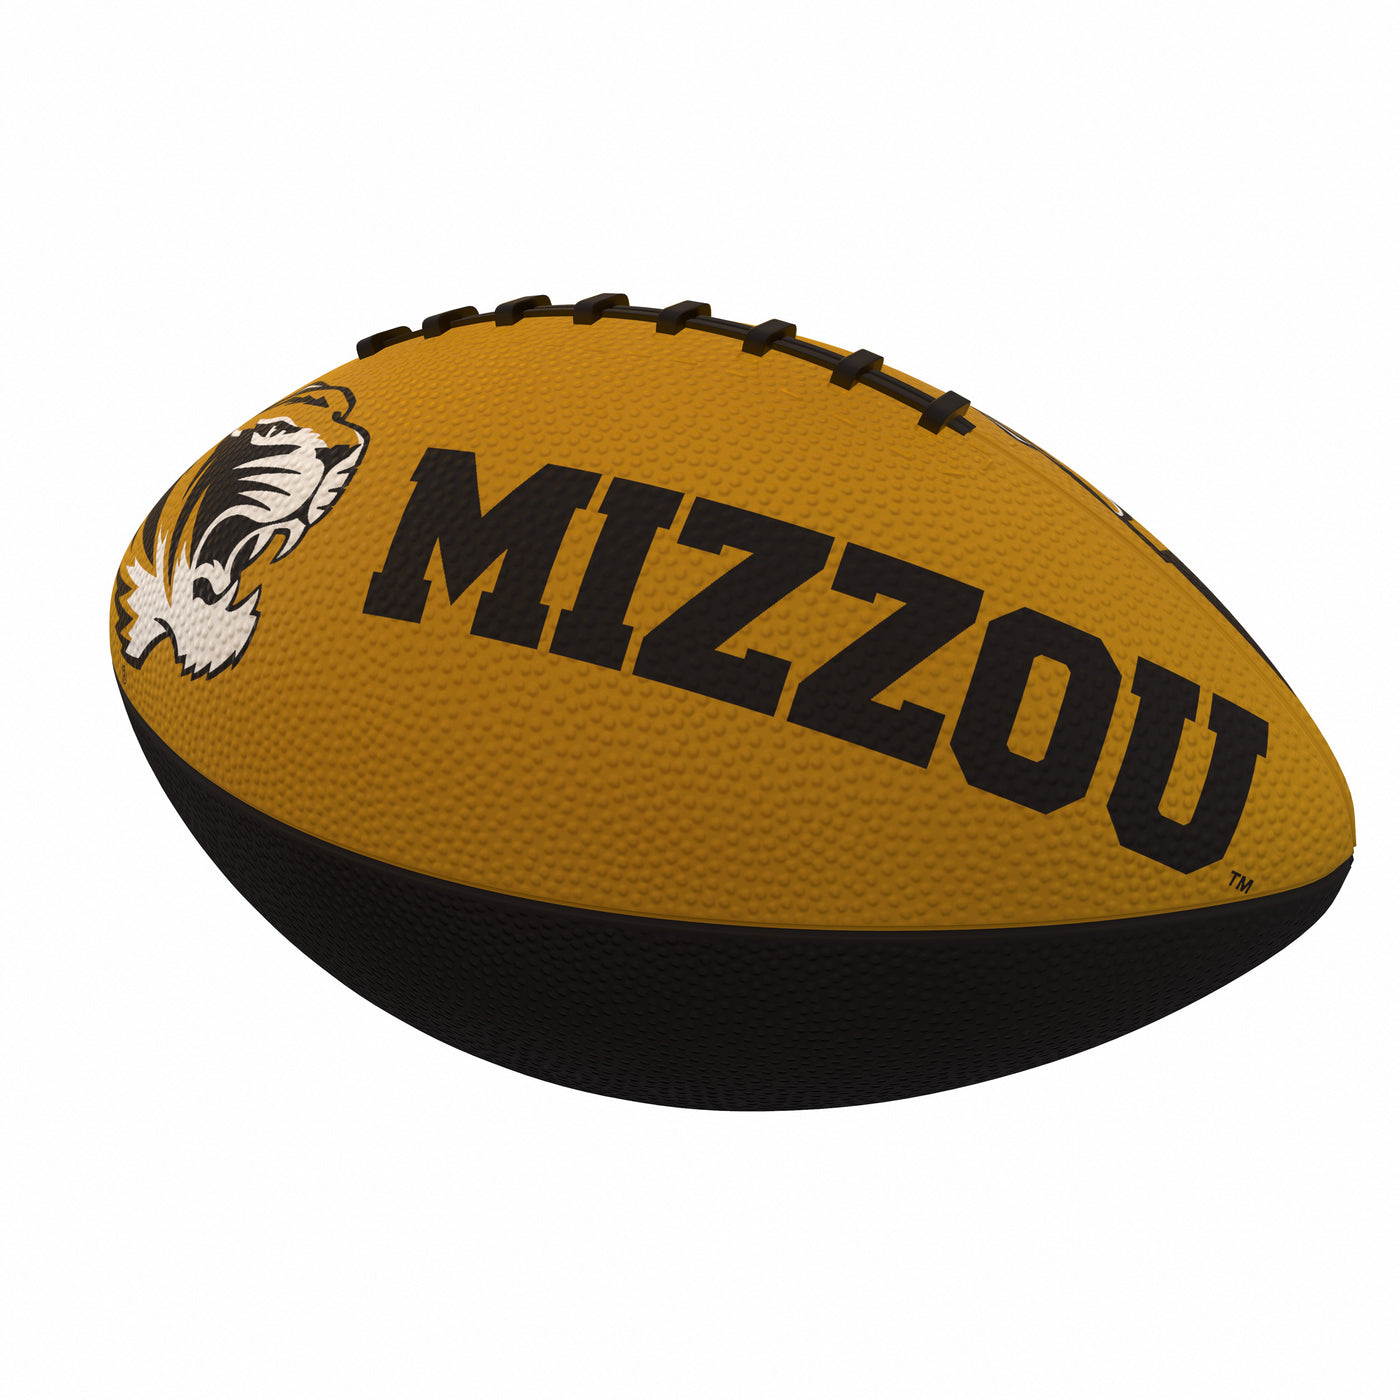 Missouri Combo Logo Junior-Size Rubber Football